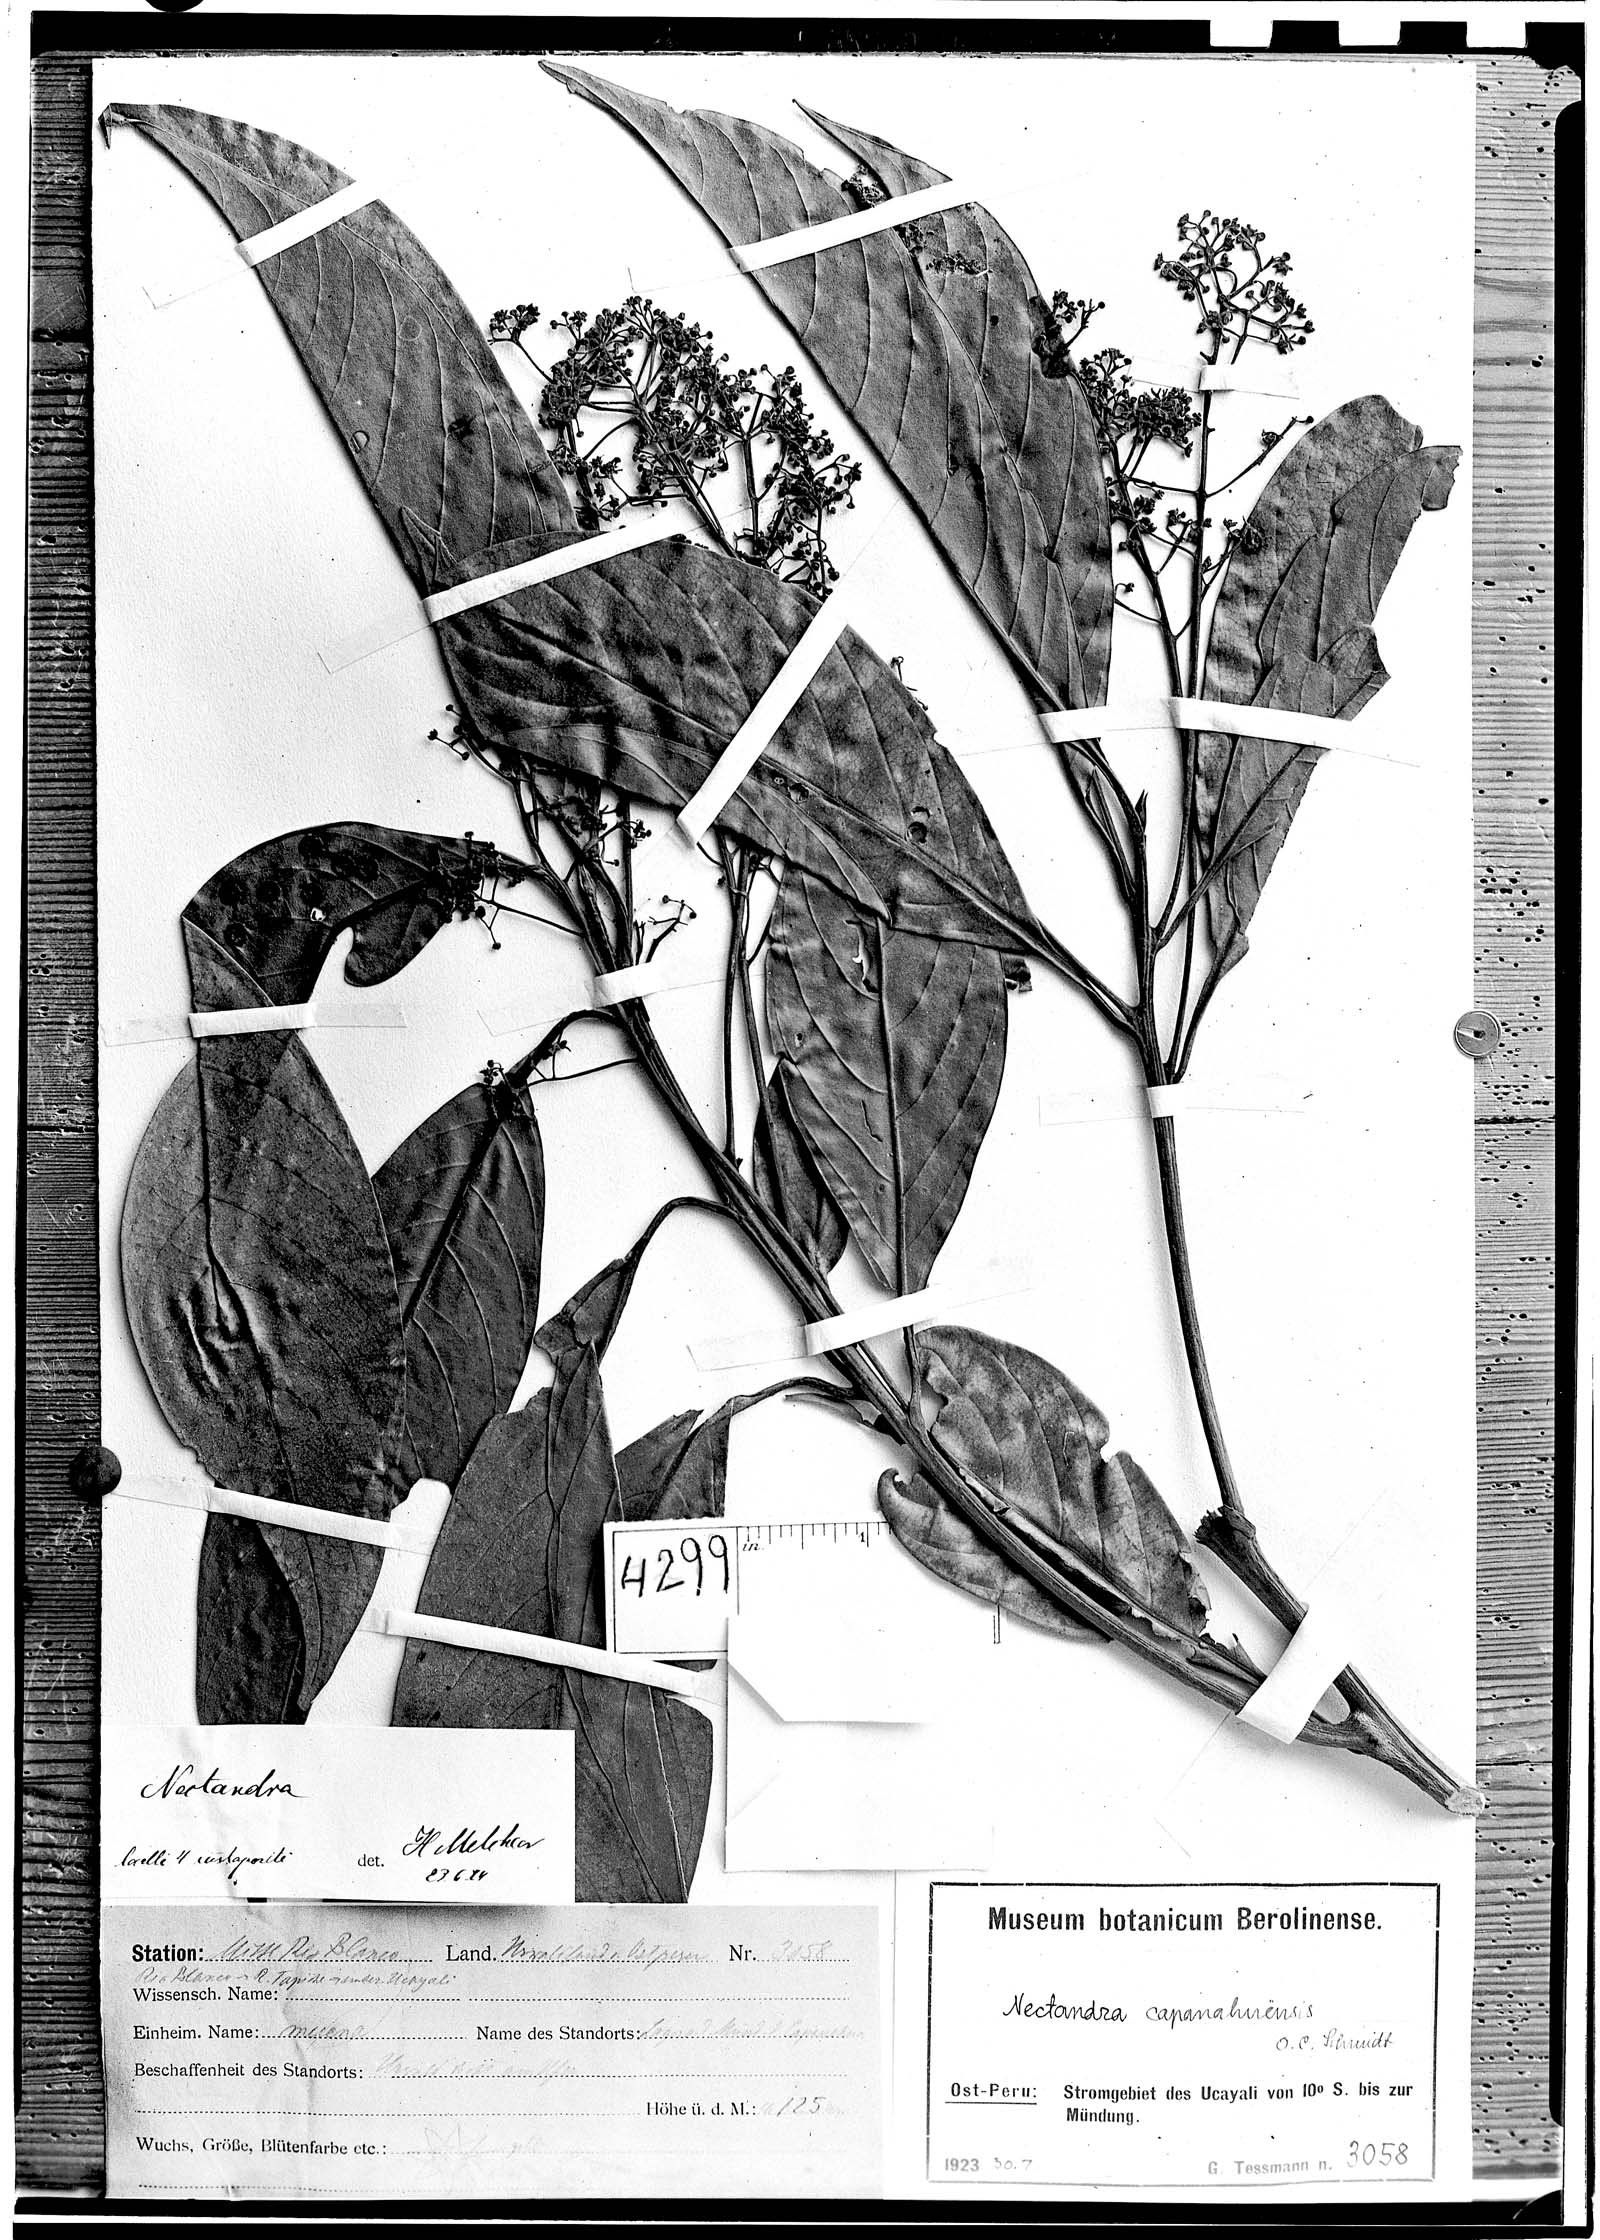 Nectandra capanahuensis image